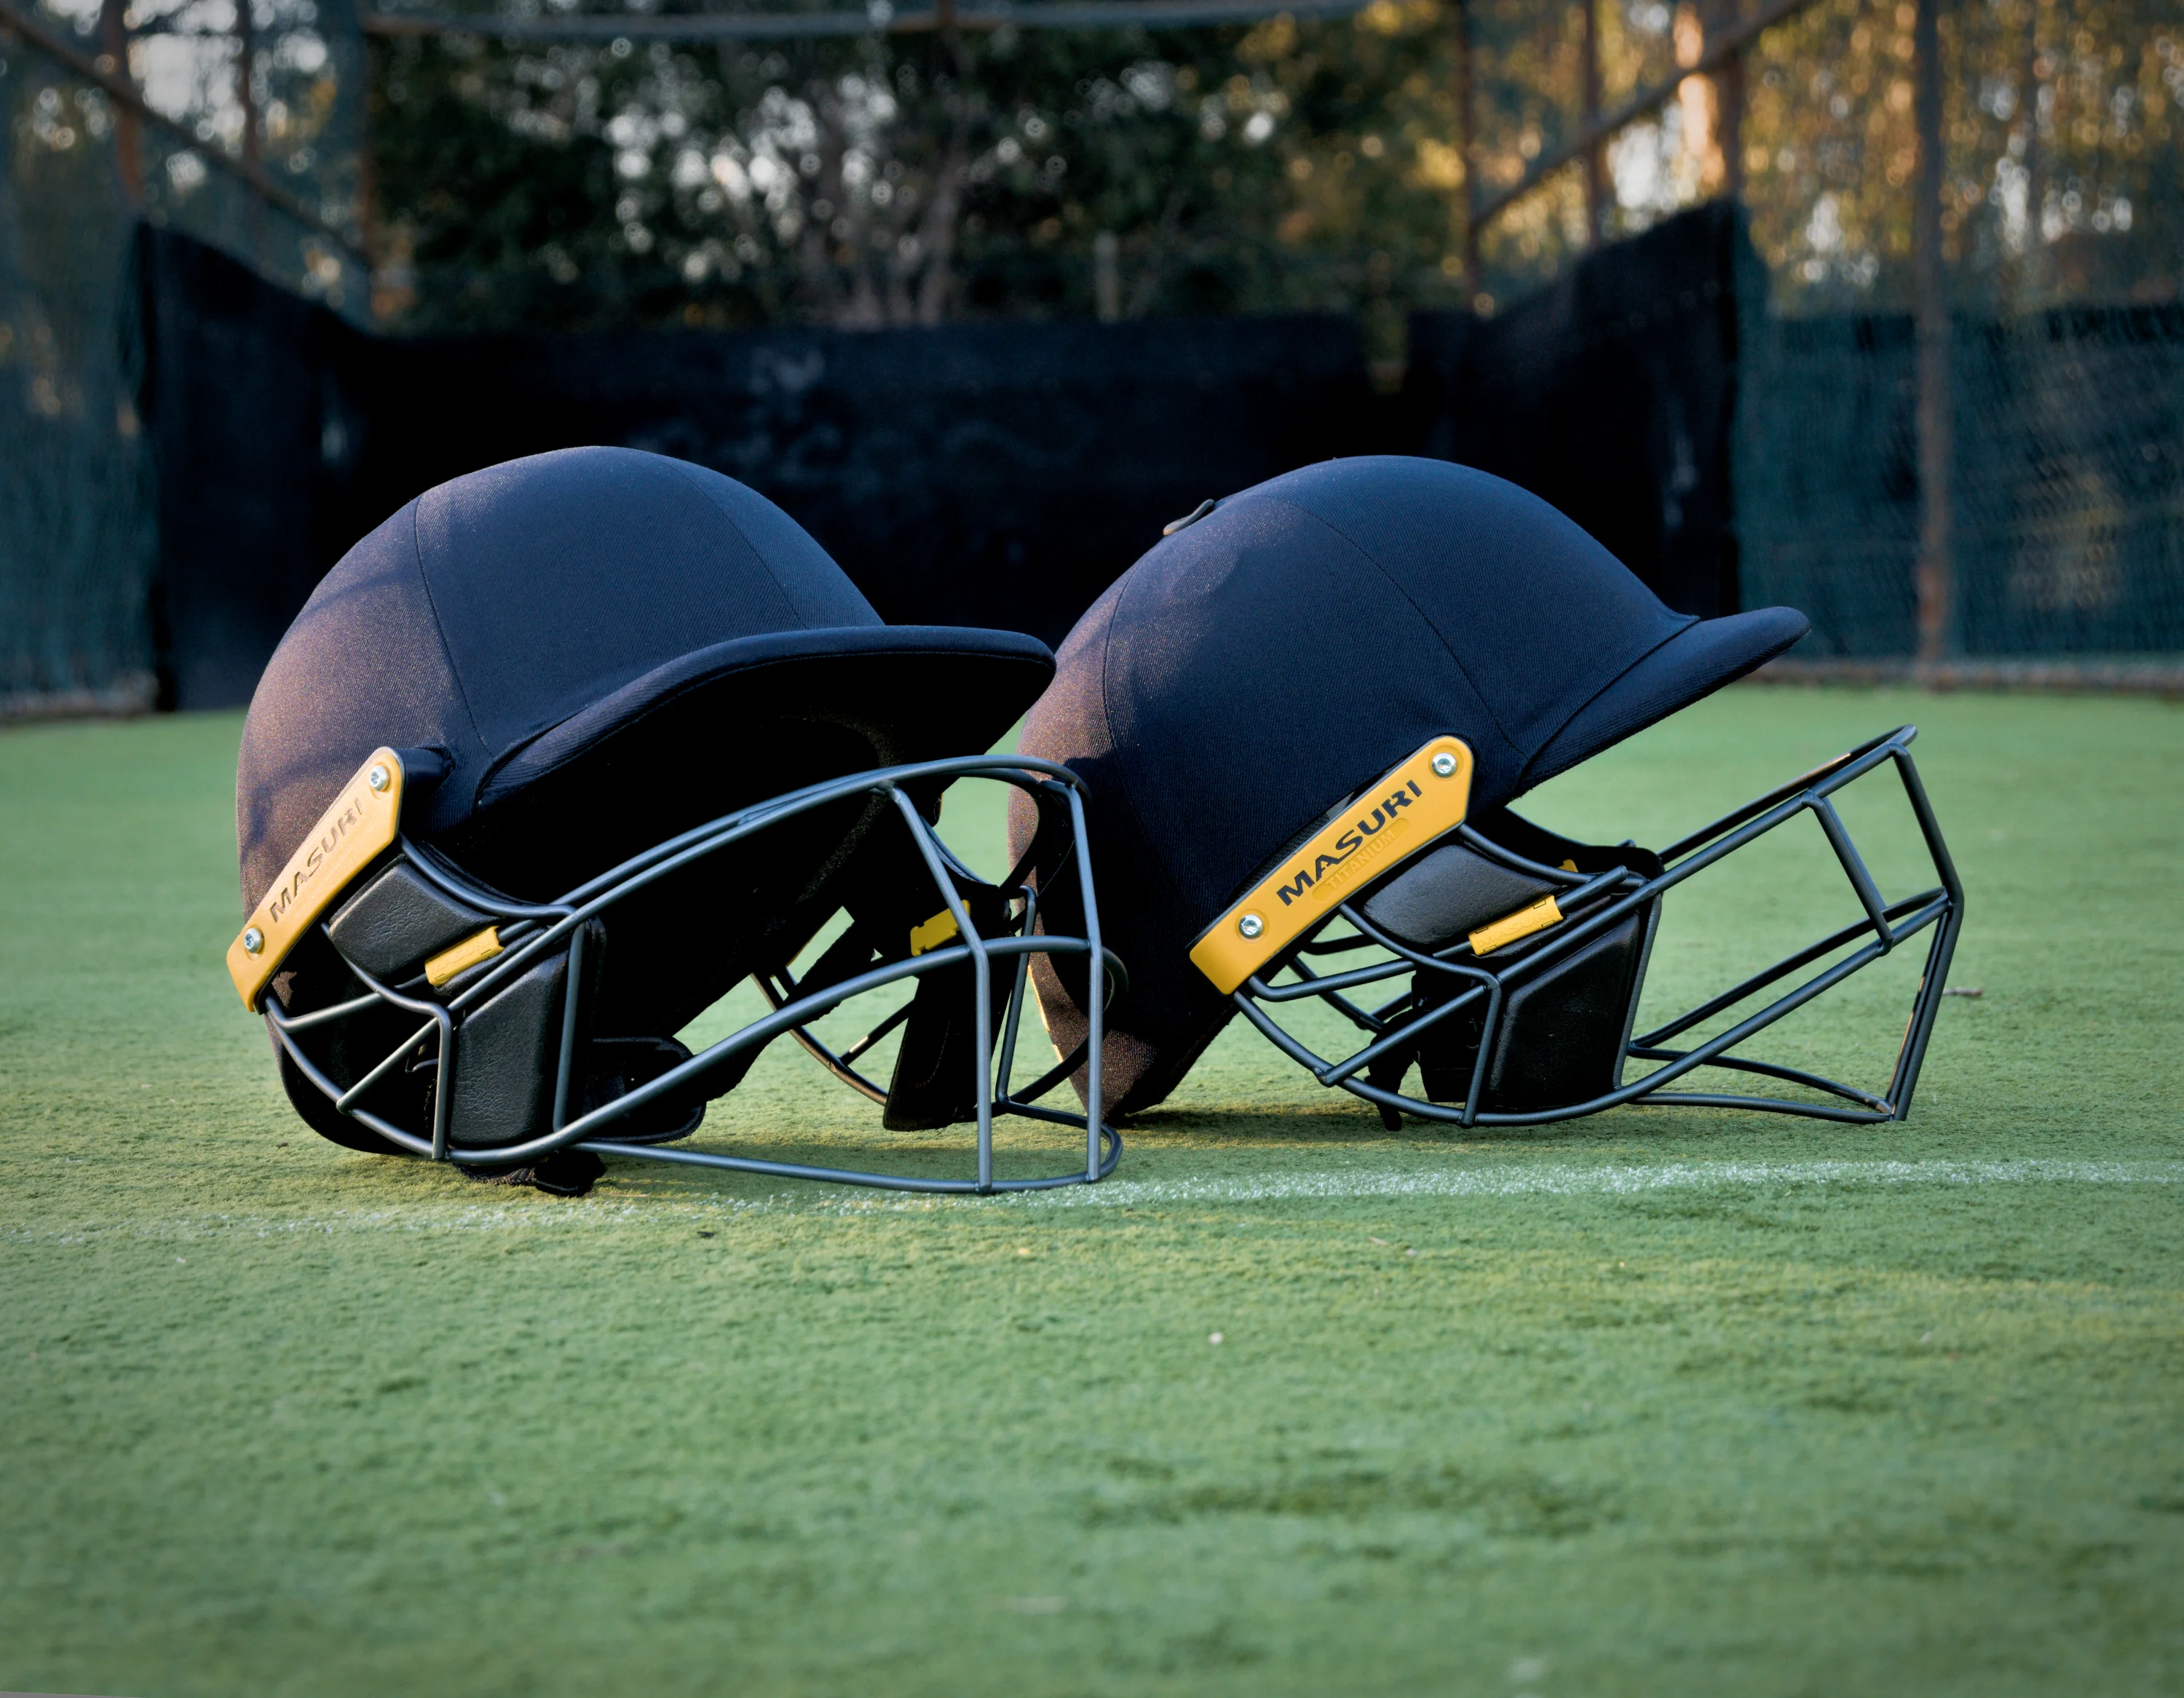 Masuri T Line Cricket Helmets